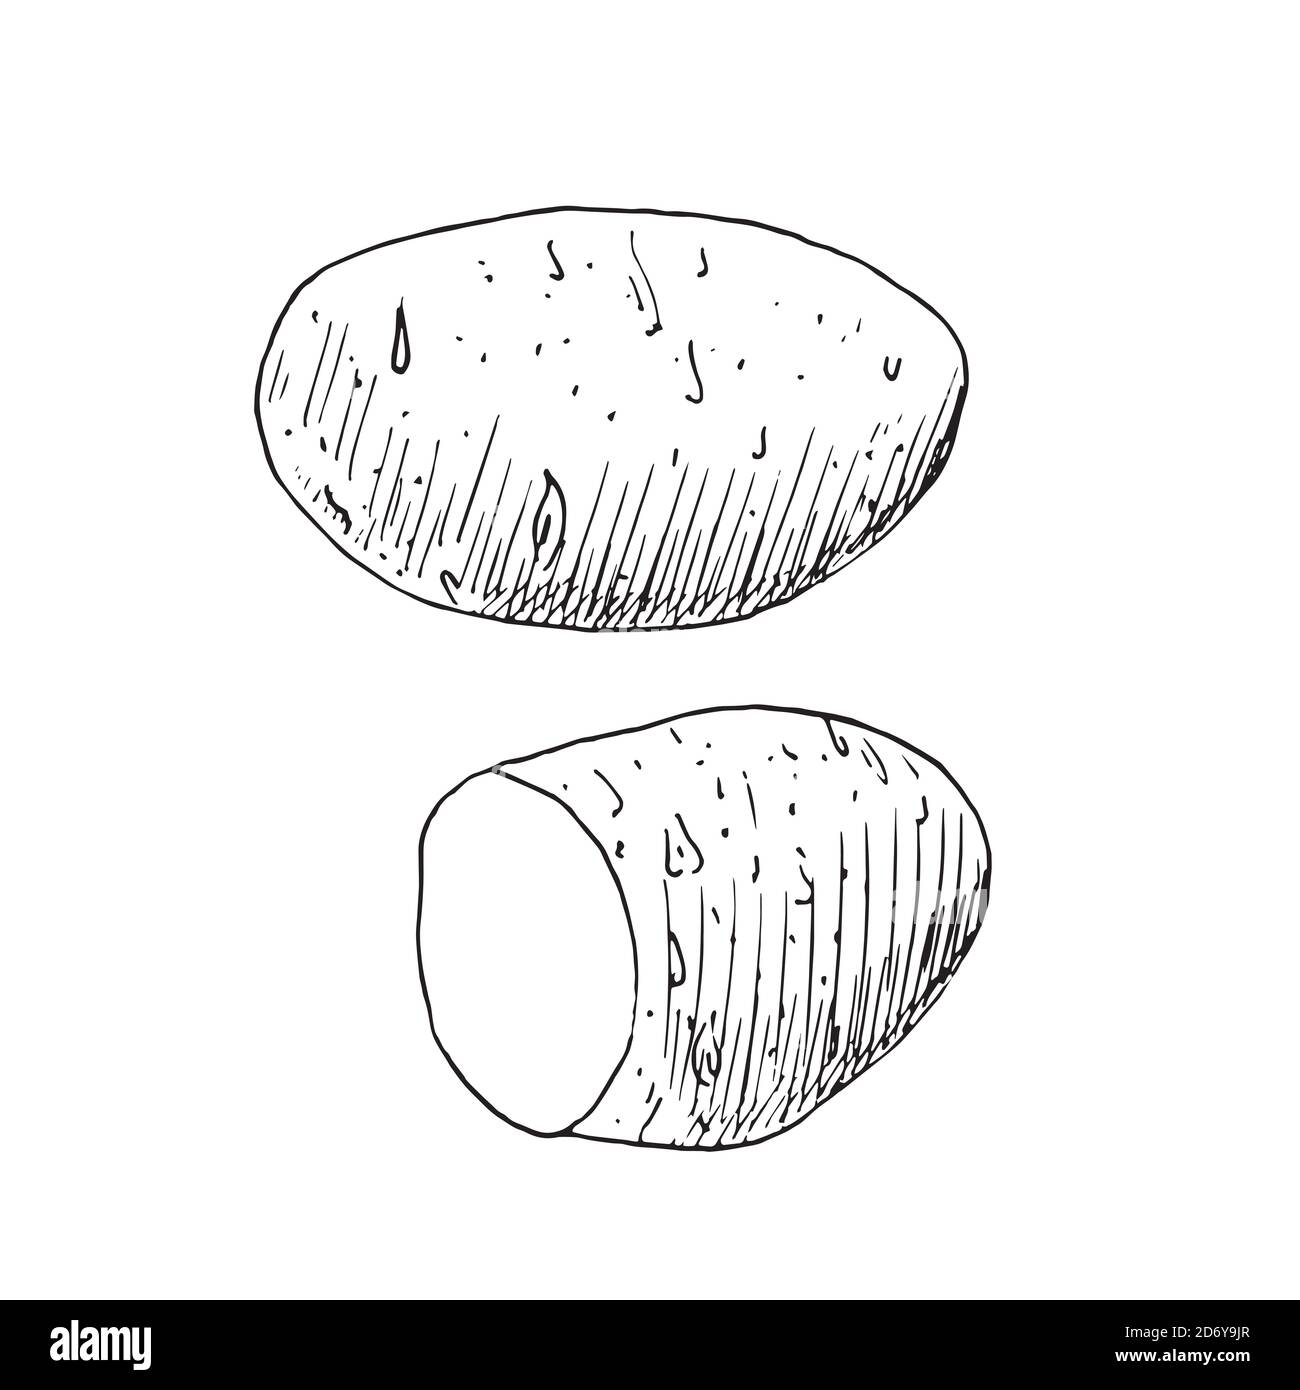 How to Sketch a Potato  YouTube